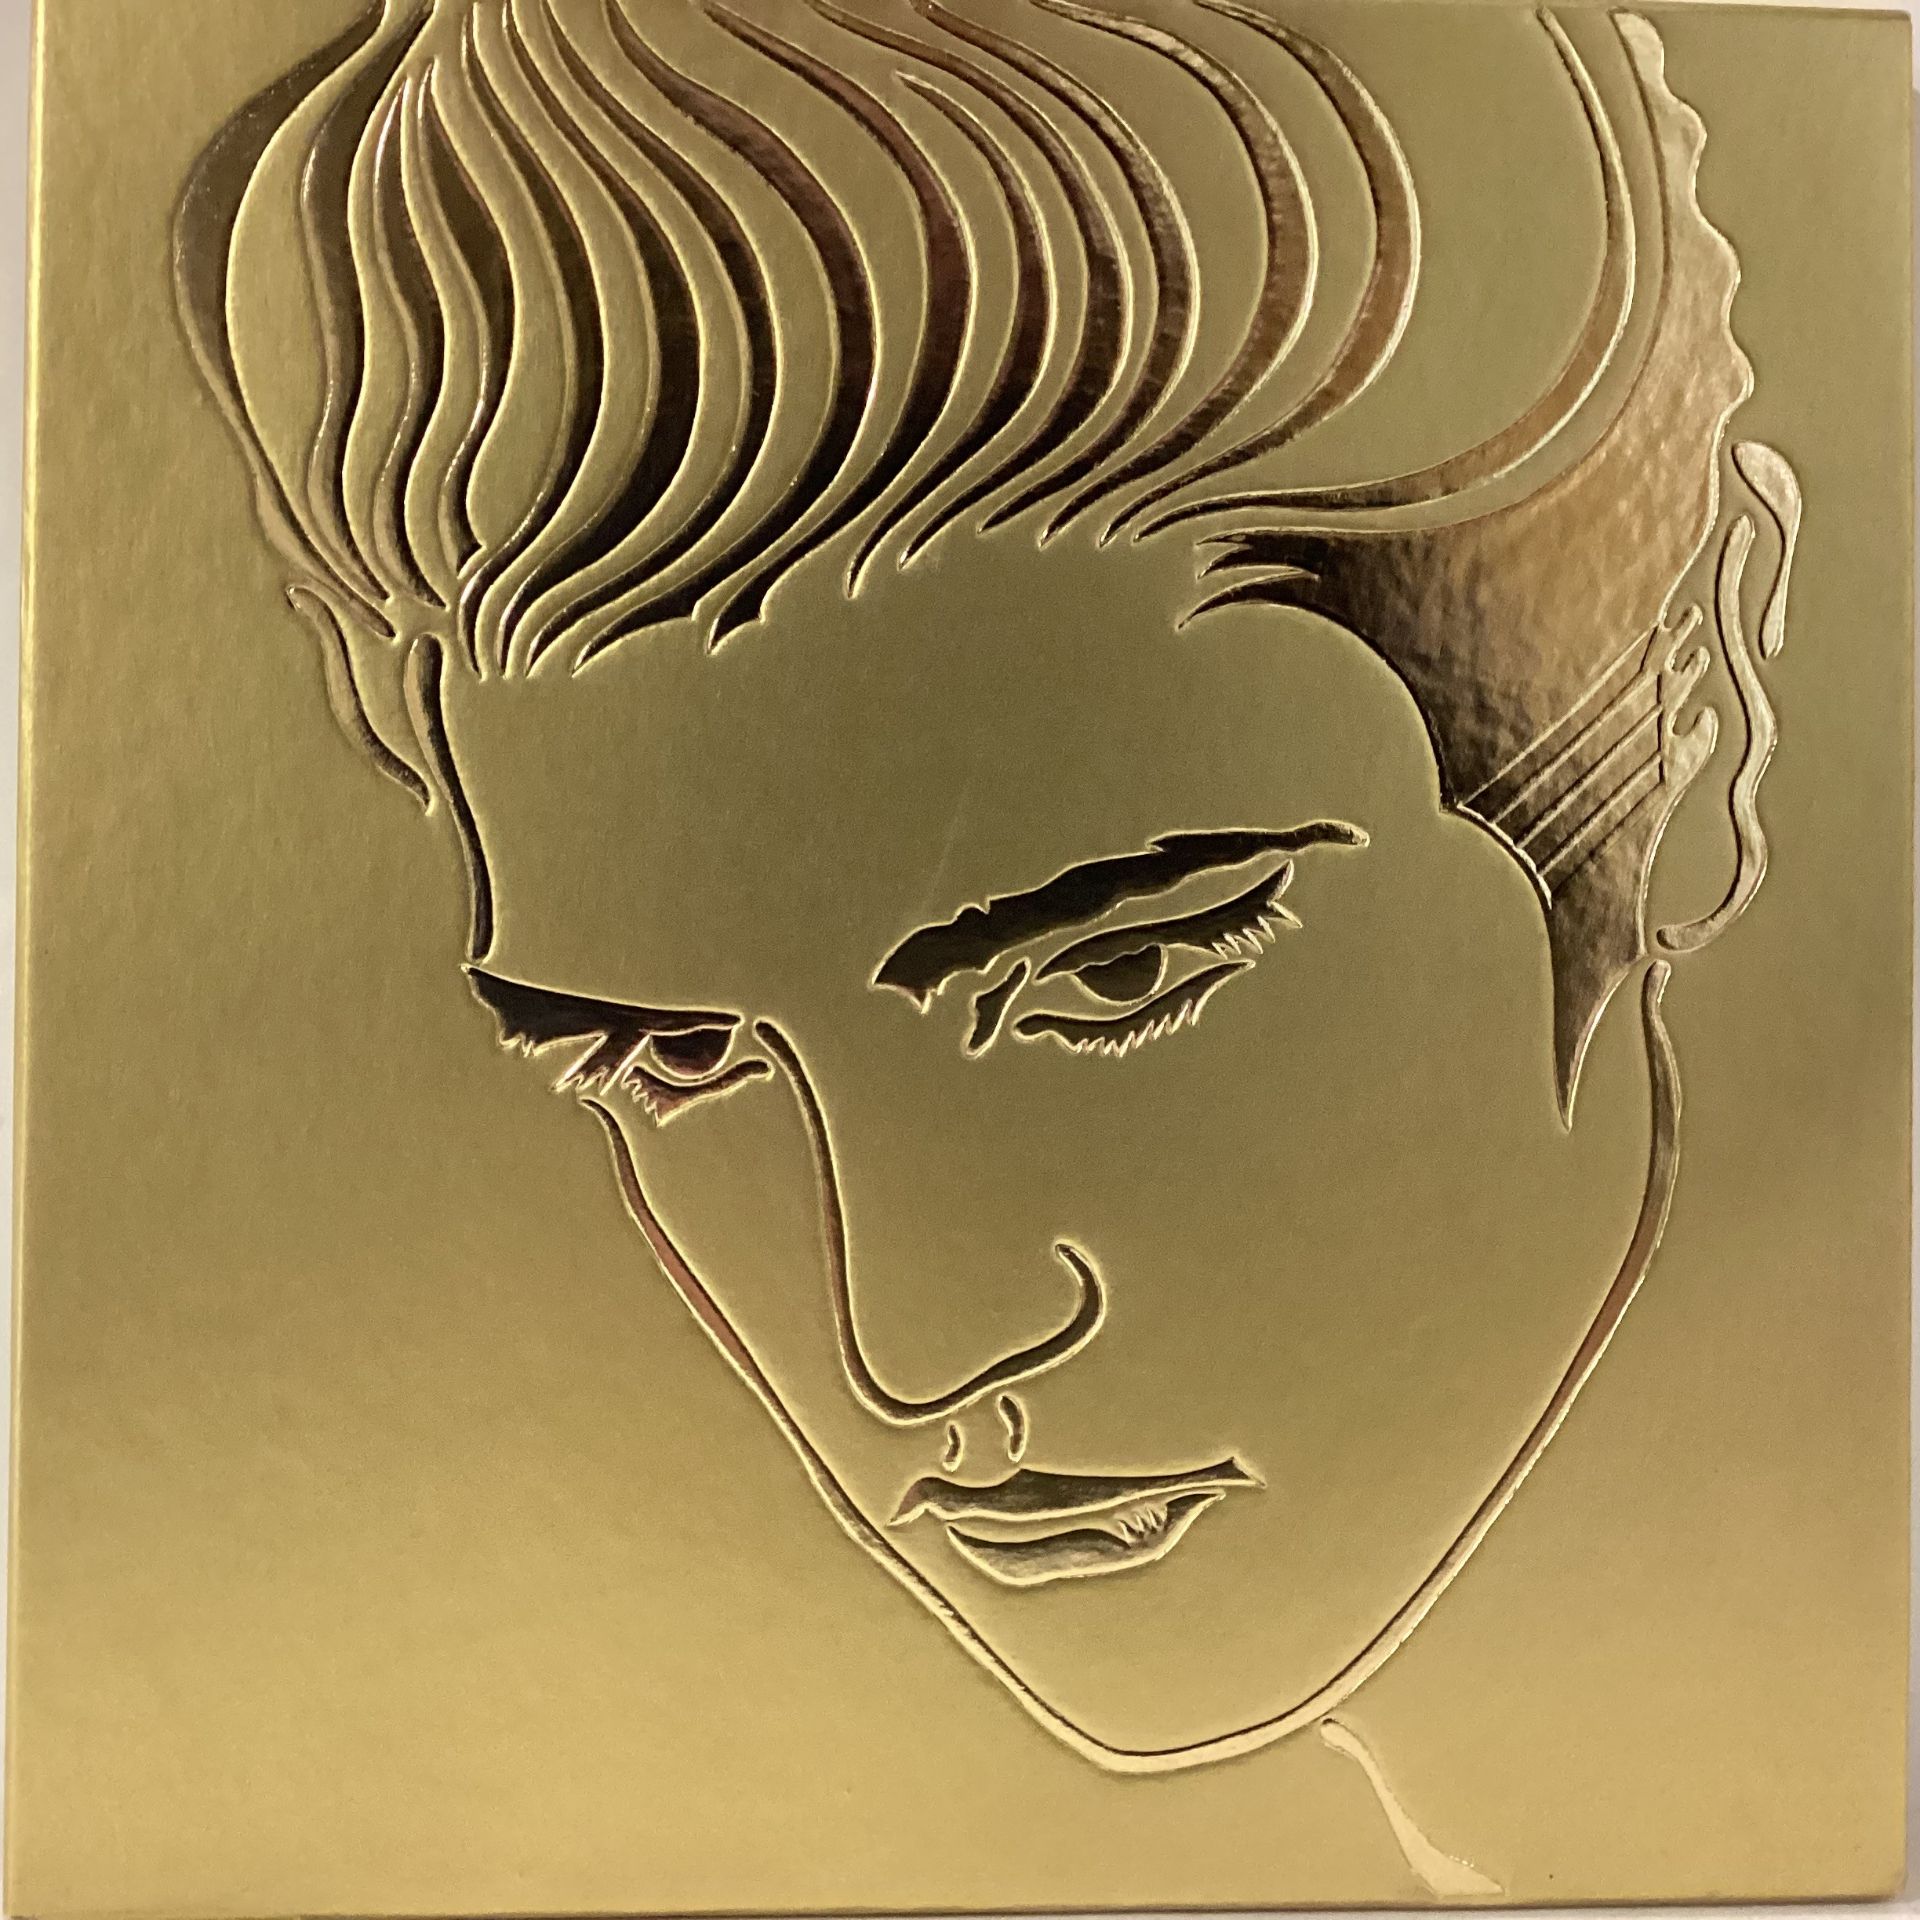 ELVIS PRESLEY 50th ANNIVERSARY 6LP BOX SET ‘A GOLDEN CELEBRATION’. Nicely presented box set of 6